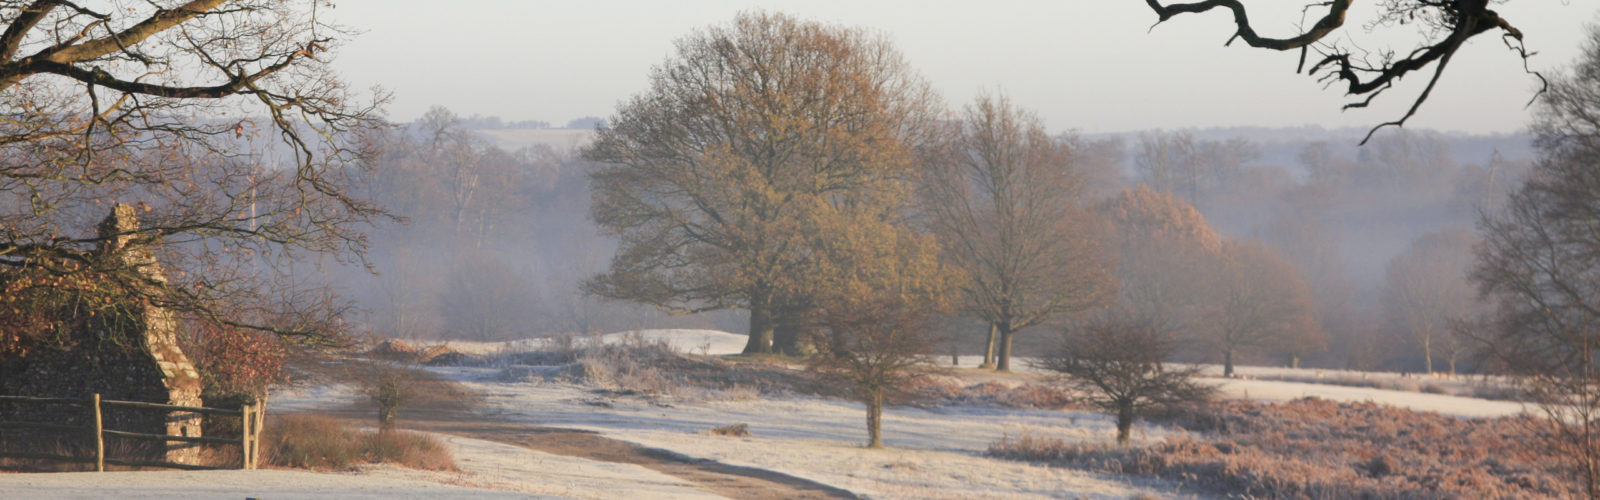 southern-england-landscape-frost